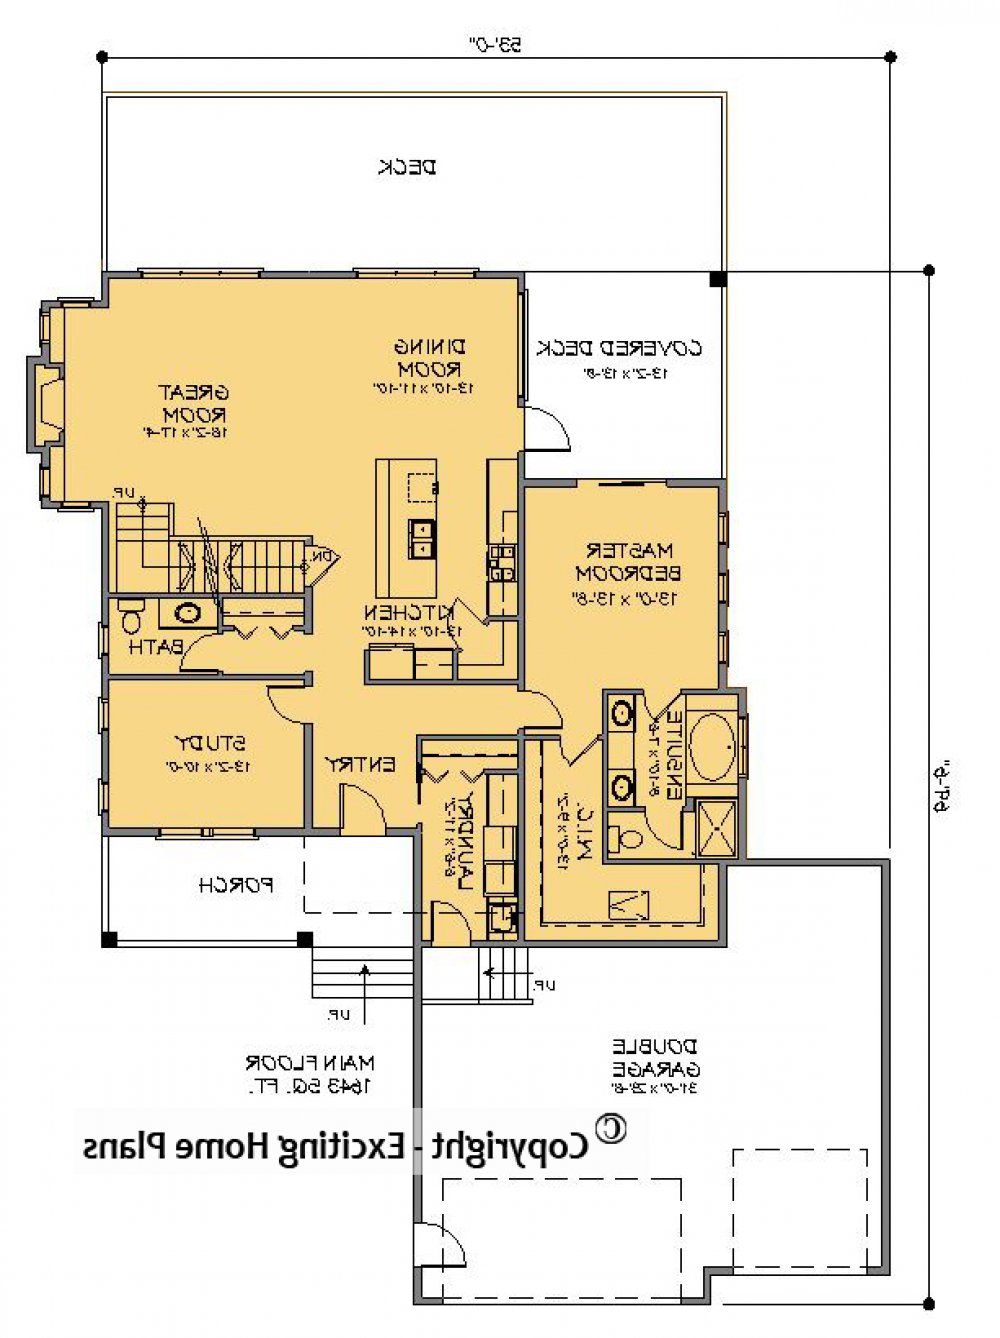 House Plan E1322-10  Main Floor Plan REVERSE